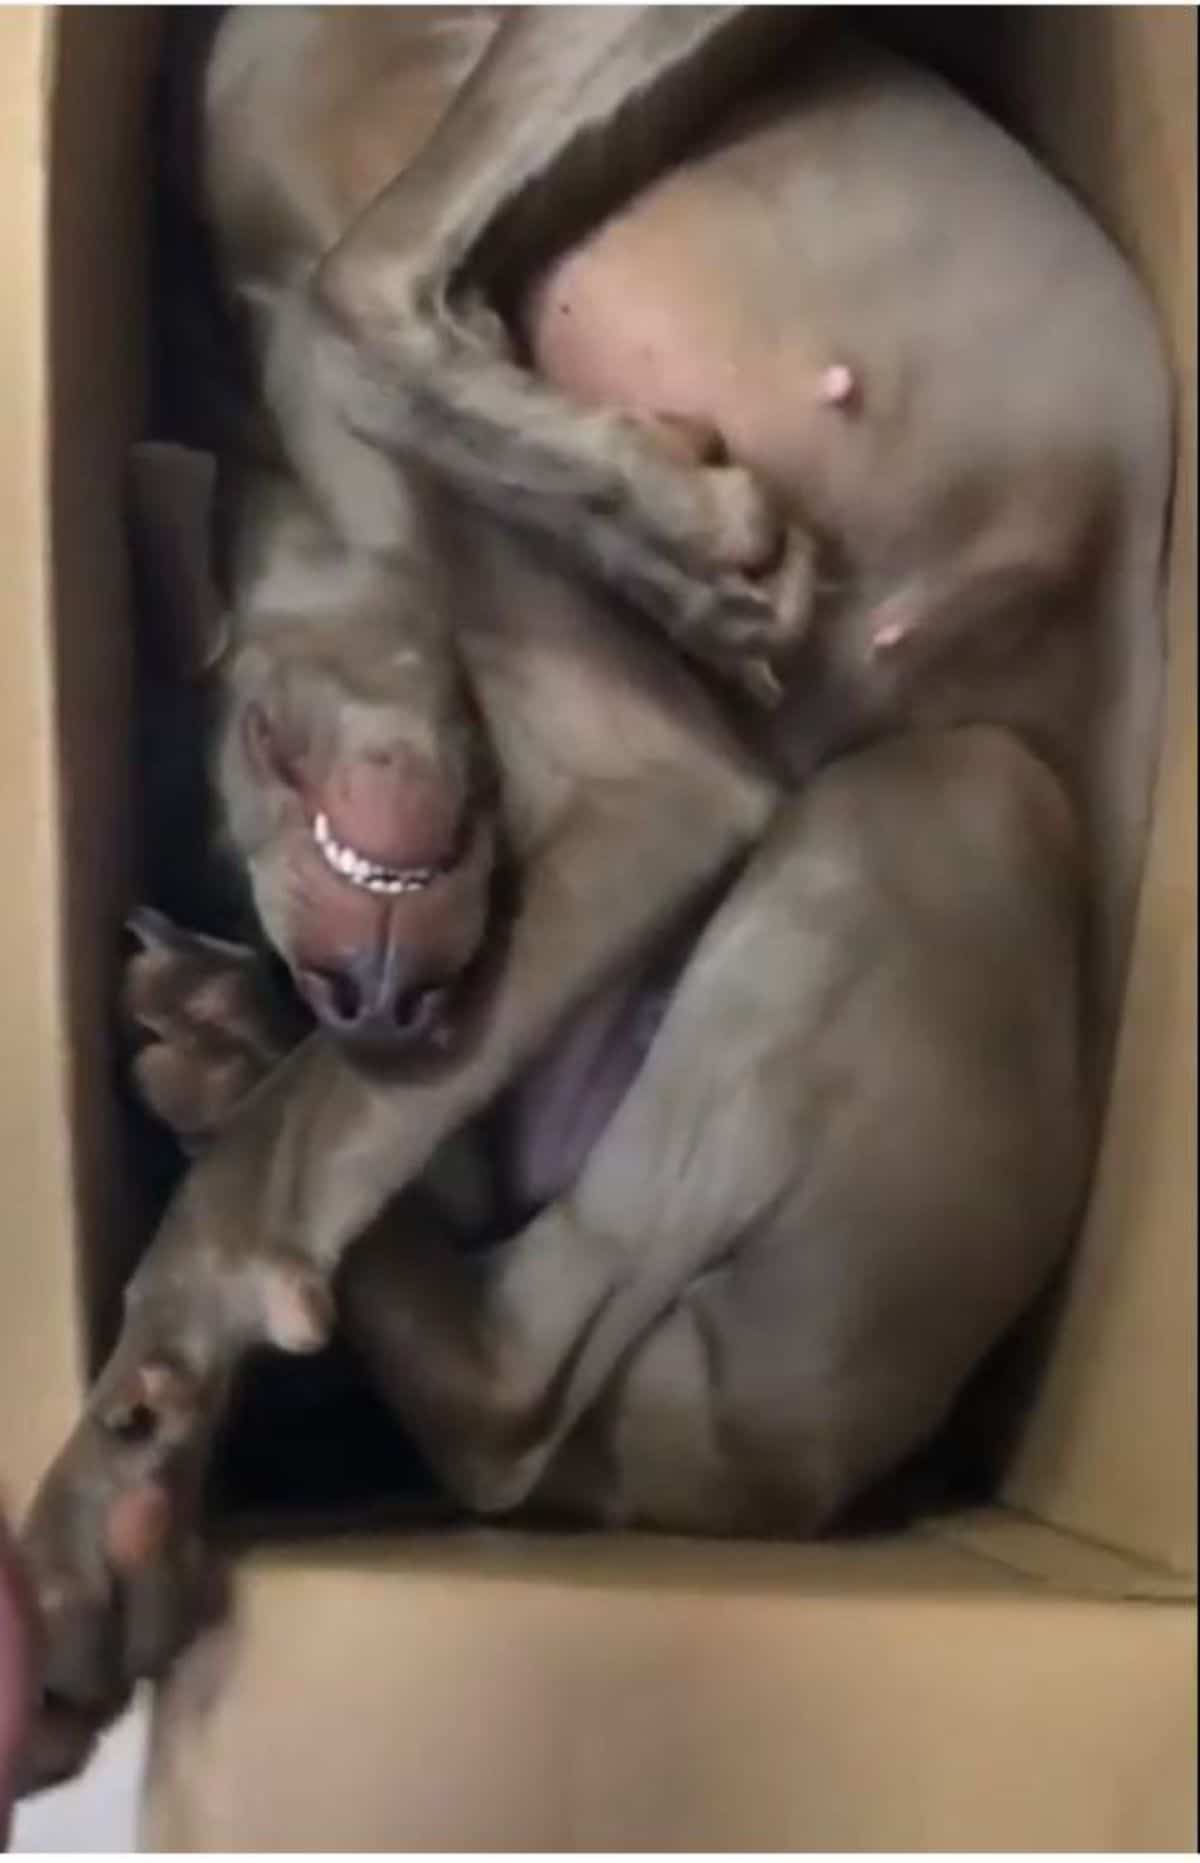 grey dog sleeping in a contorted position inside a cardboard box